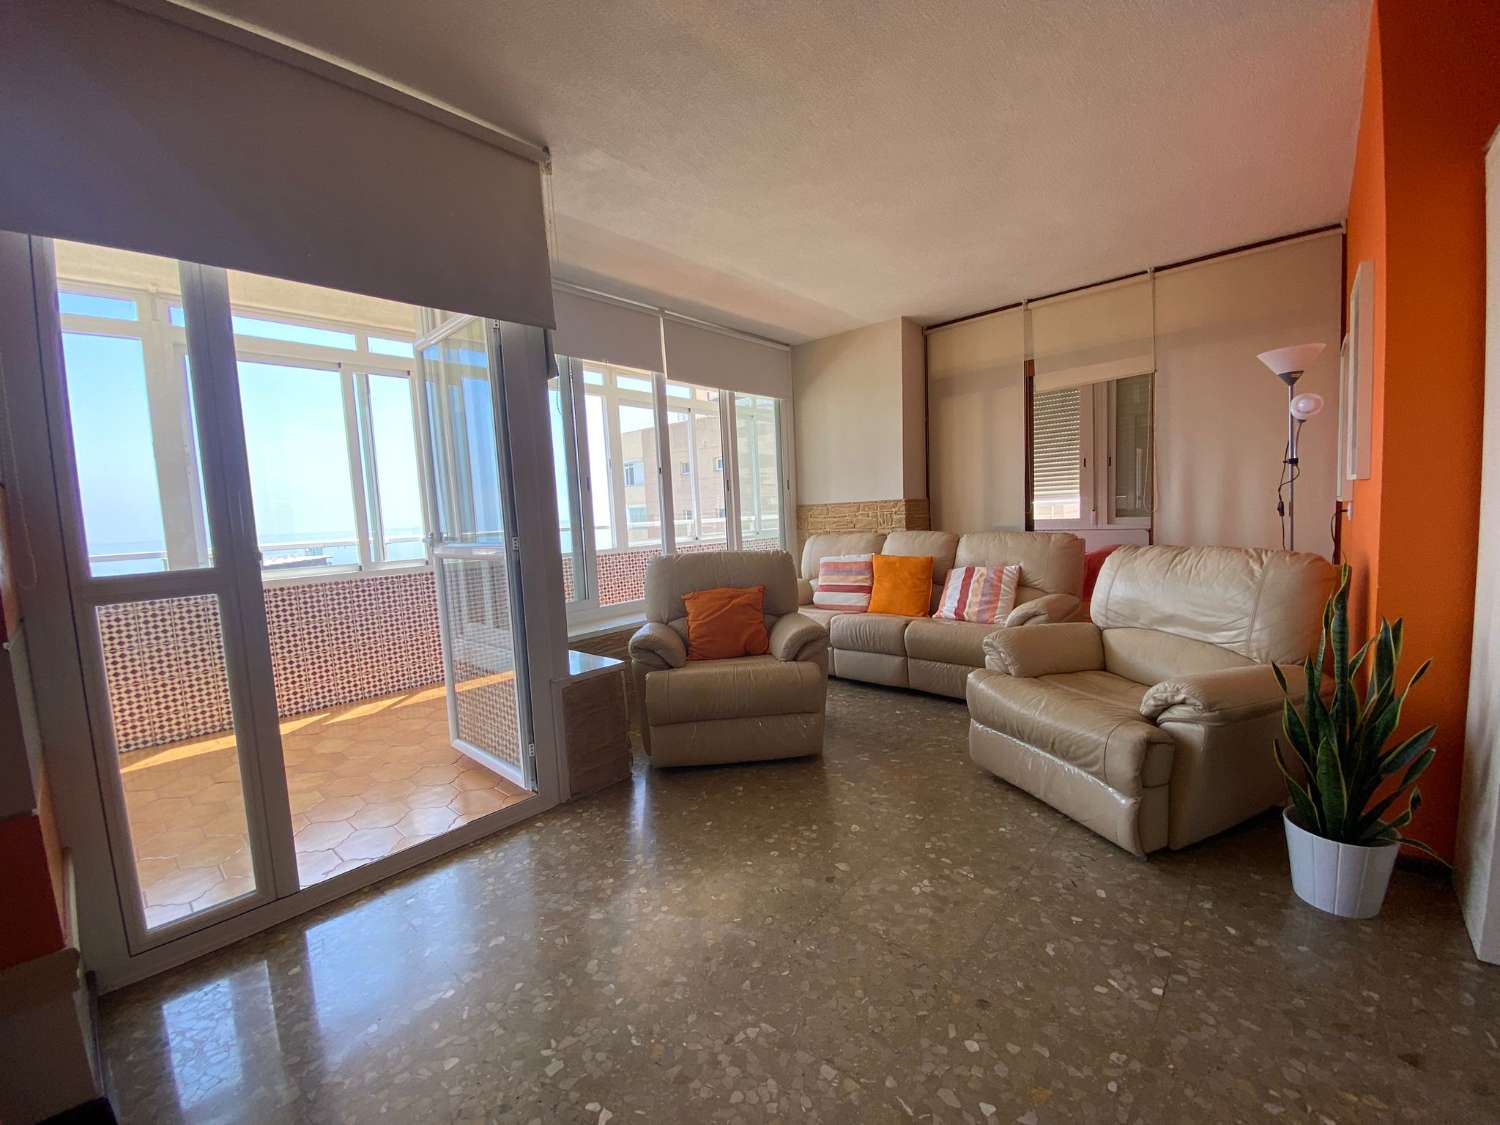 In affitto dal 01/09/23 al 30/06/24 magnifico appartamento a Playamar con vista sul mare (Torremolinos)